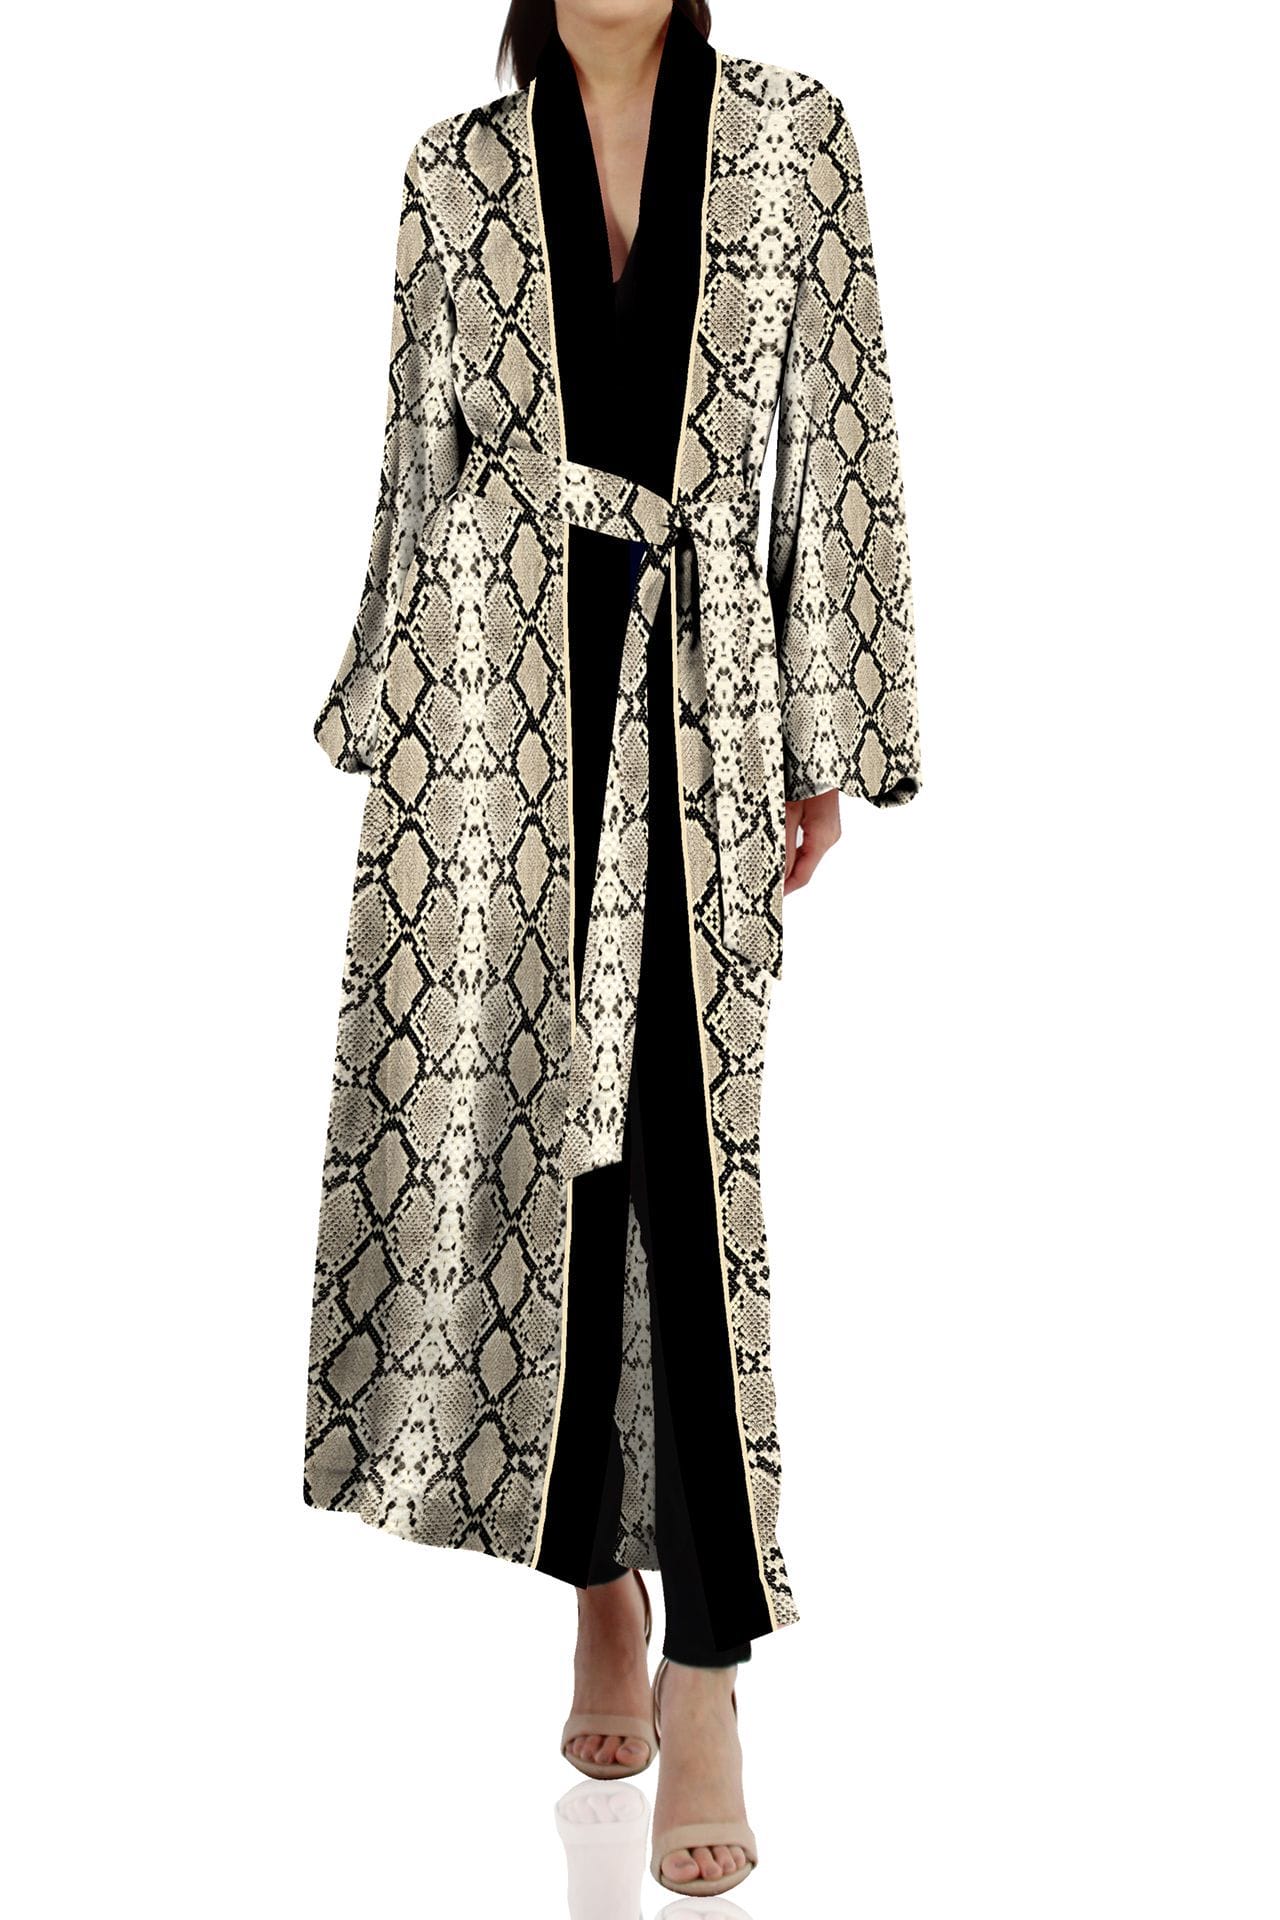 "Kyle X Shahida" "animal print kimono" "kimono silk robes for women"  "womens long kimono robe" "silk kimono for women" 